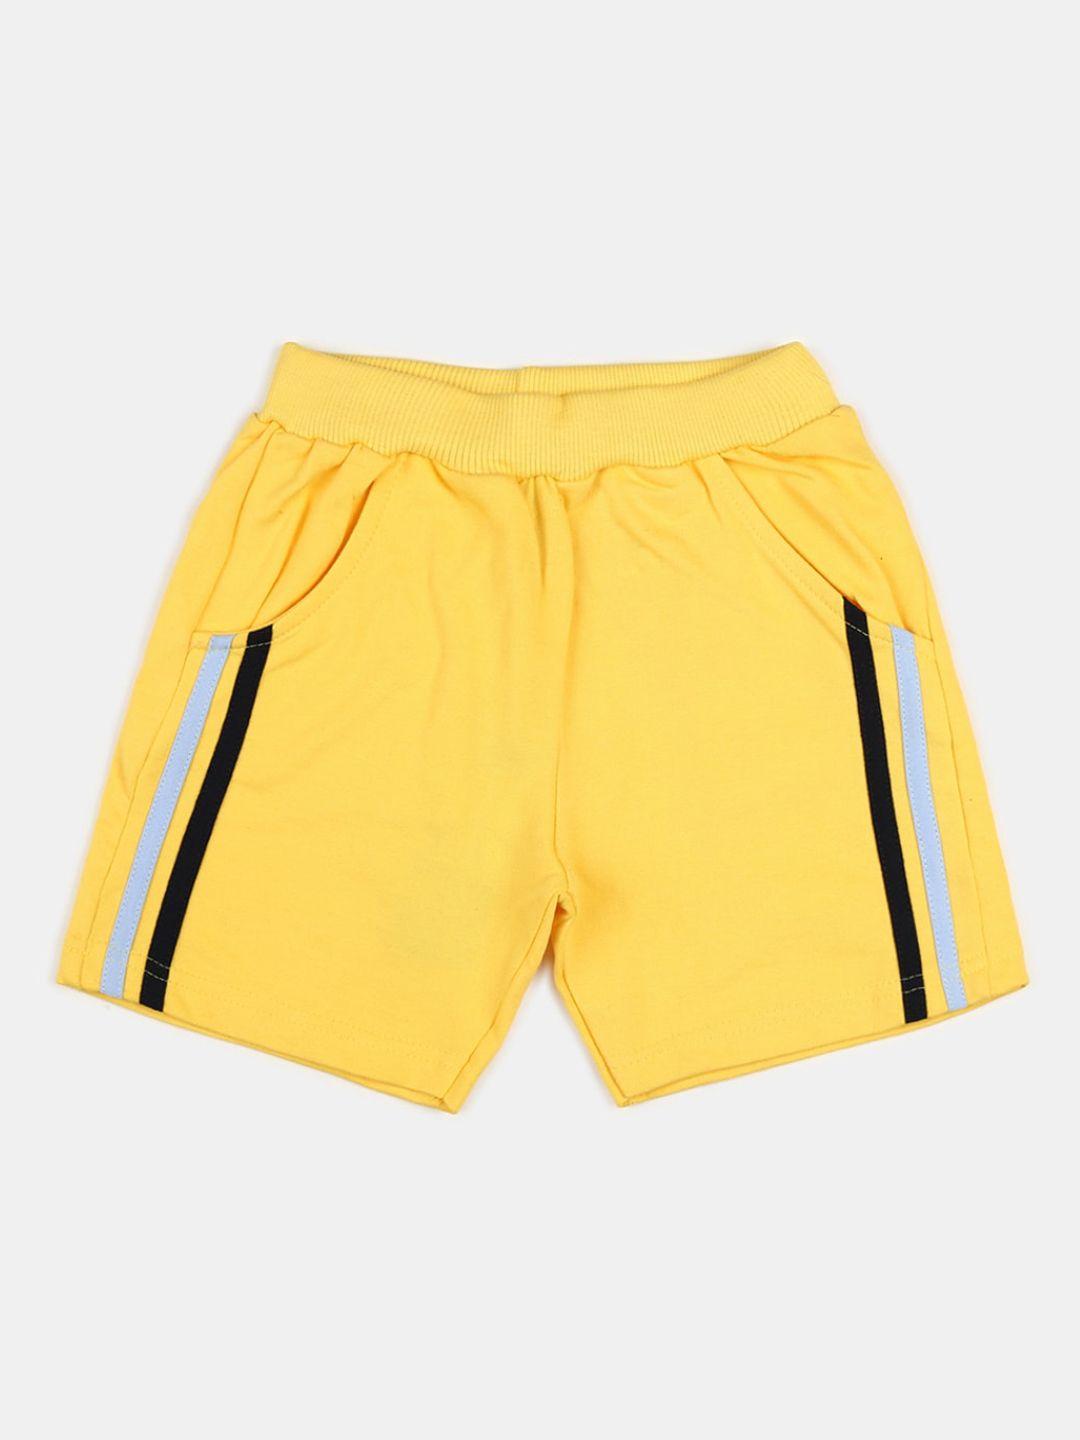 v-mart boys yellow shorts